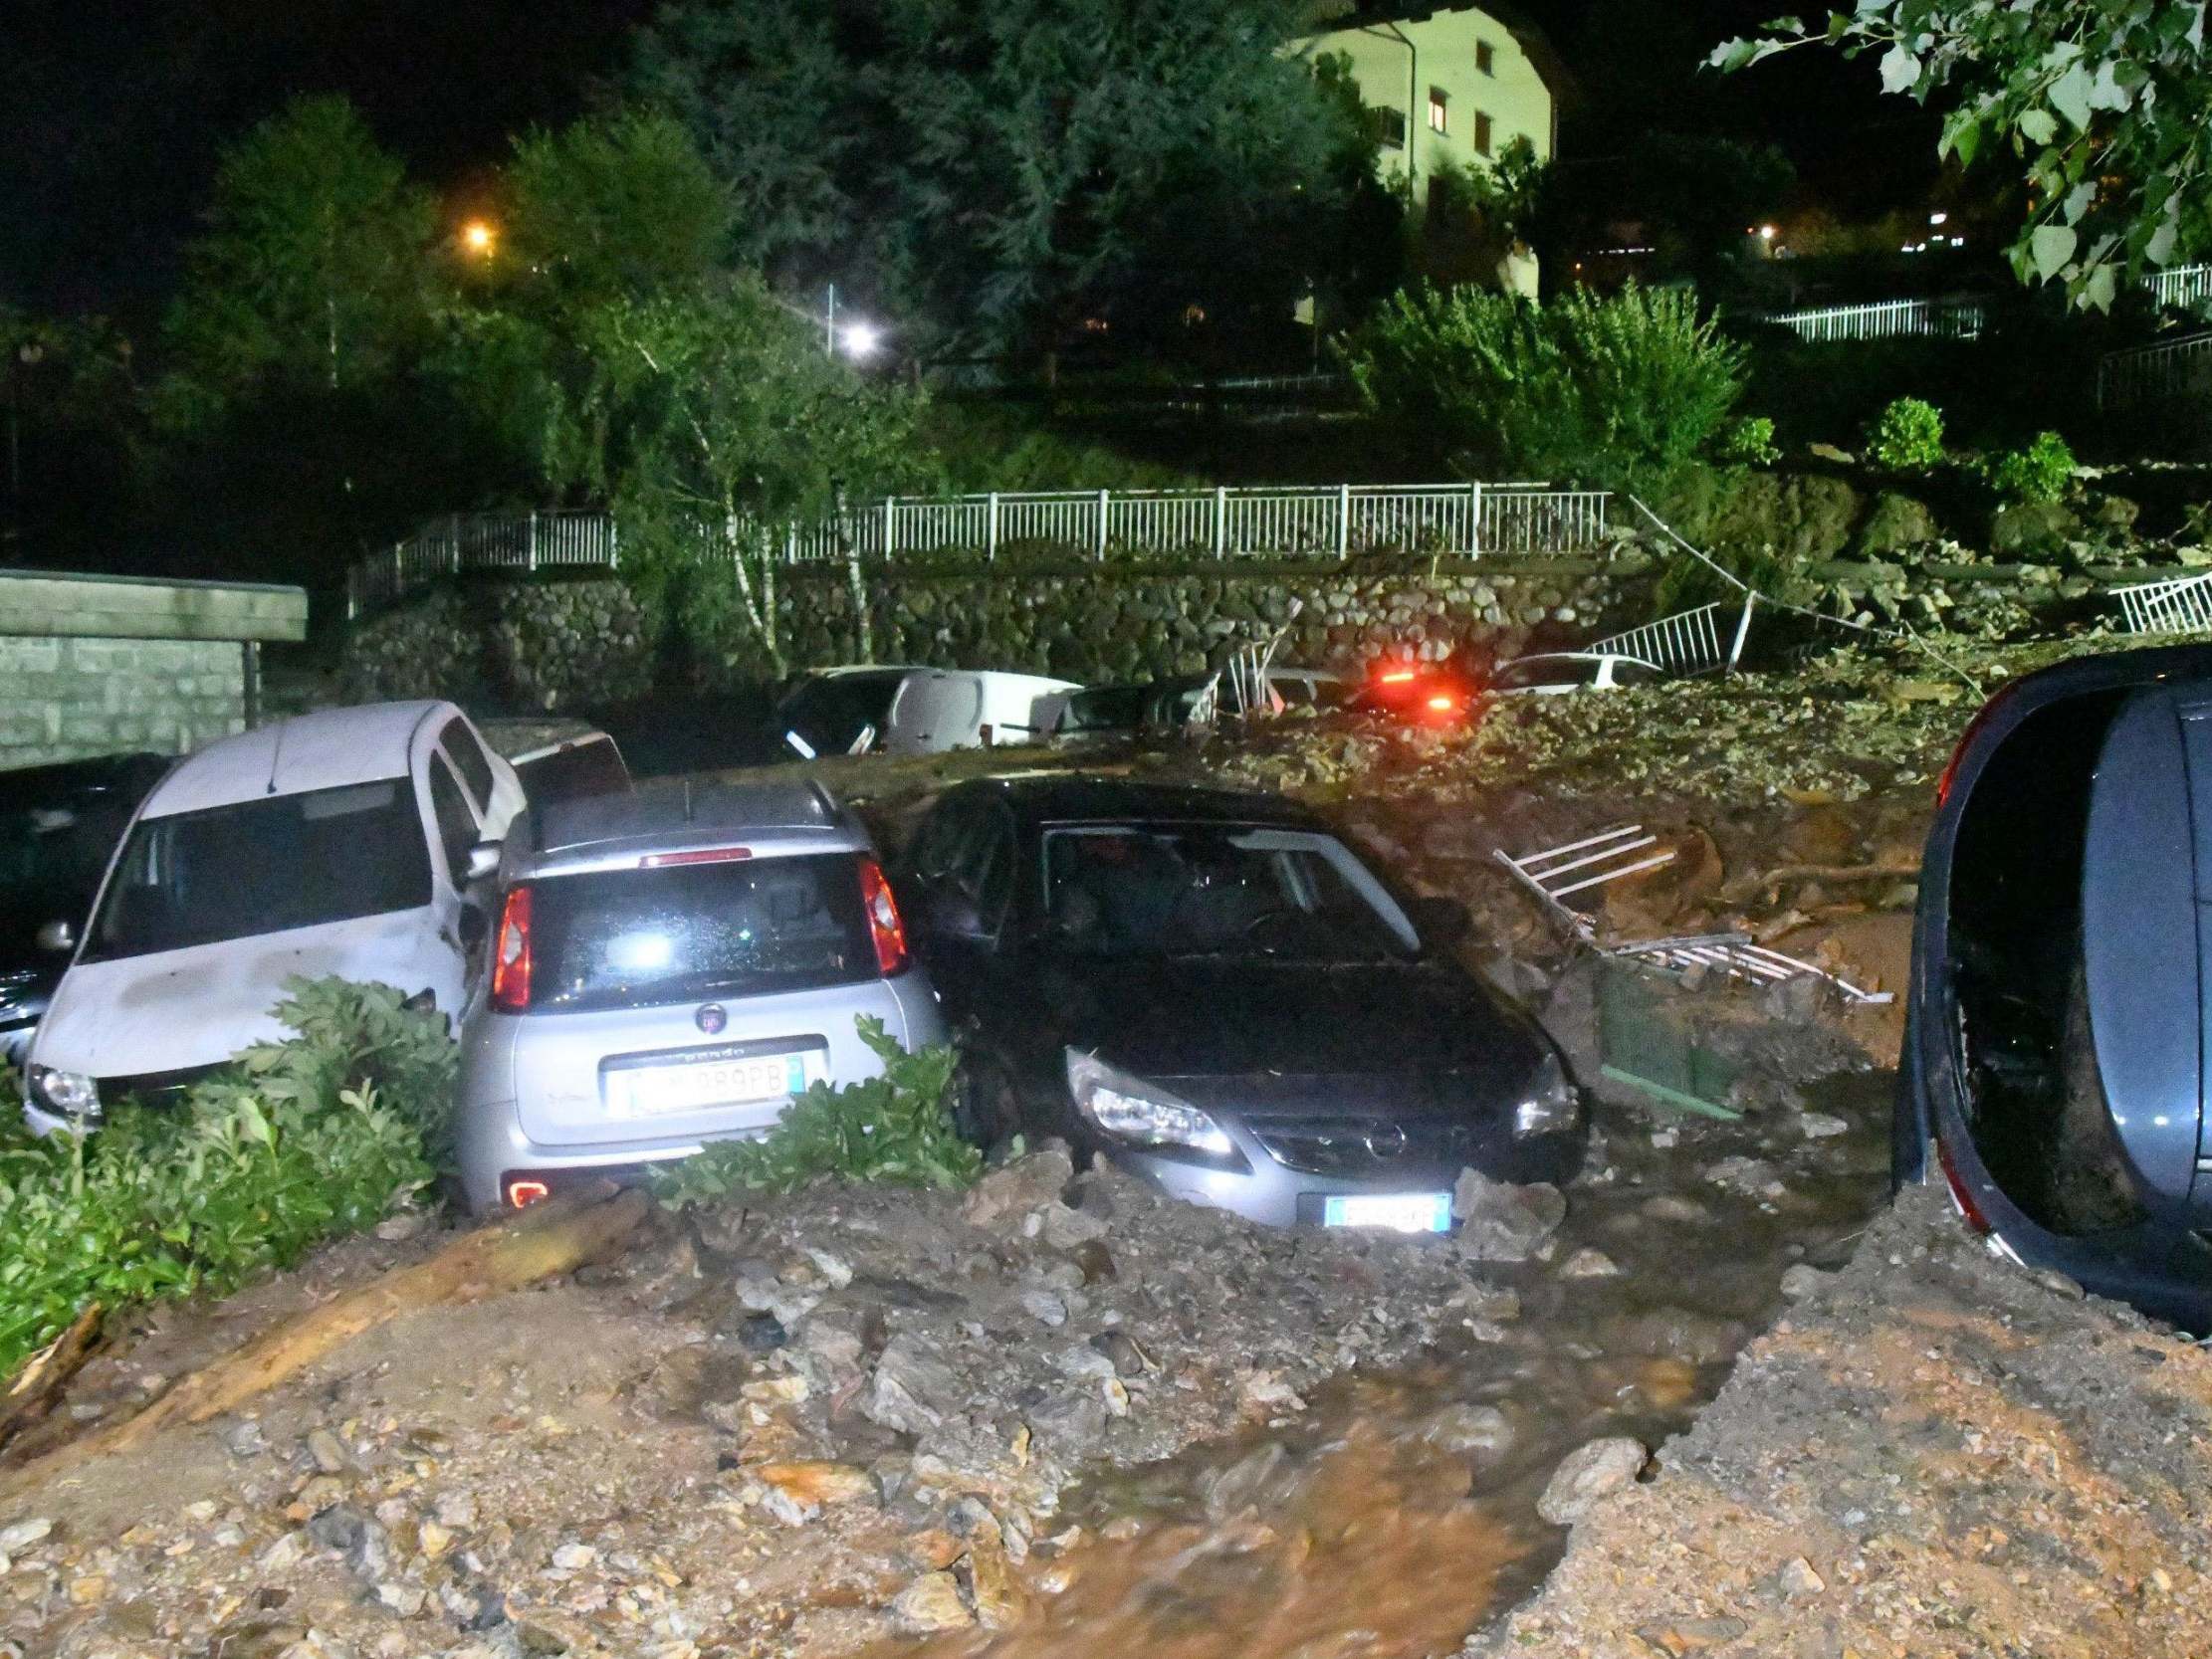 Casargo evacuation: 200 evacuated after landslide cascades through town near Lake Como